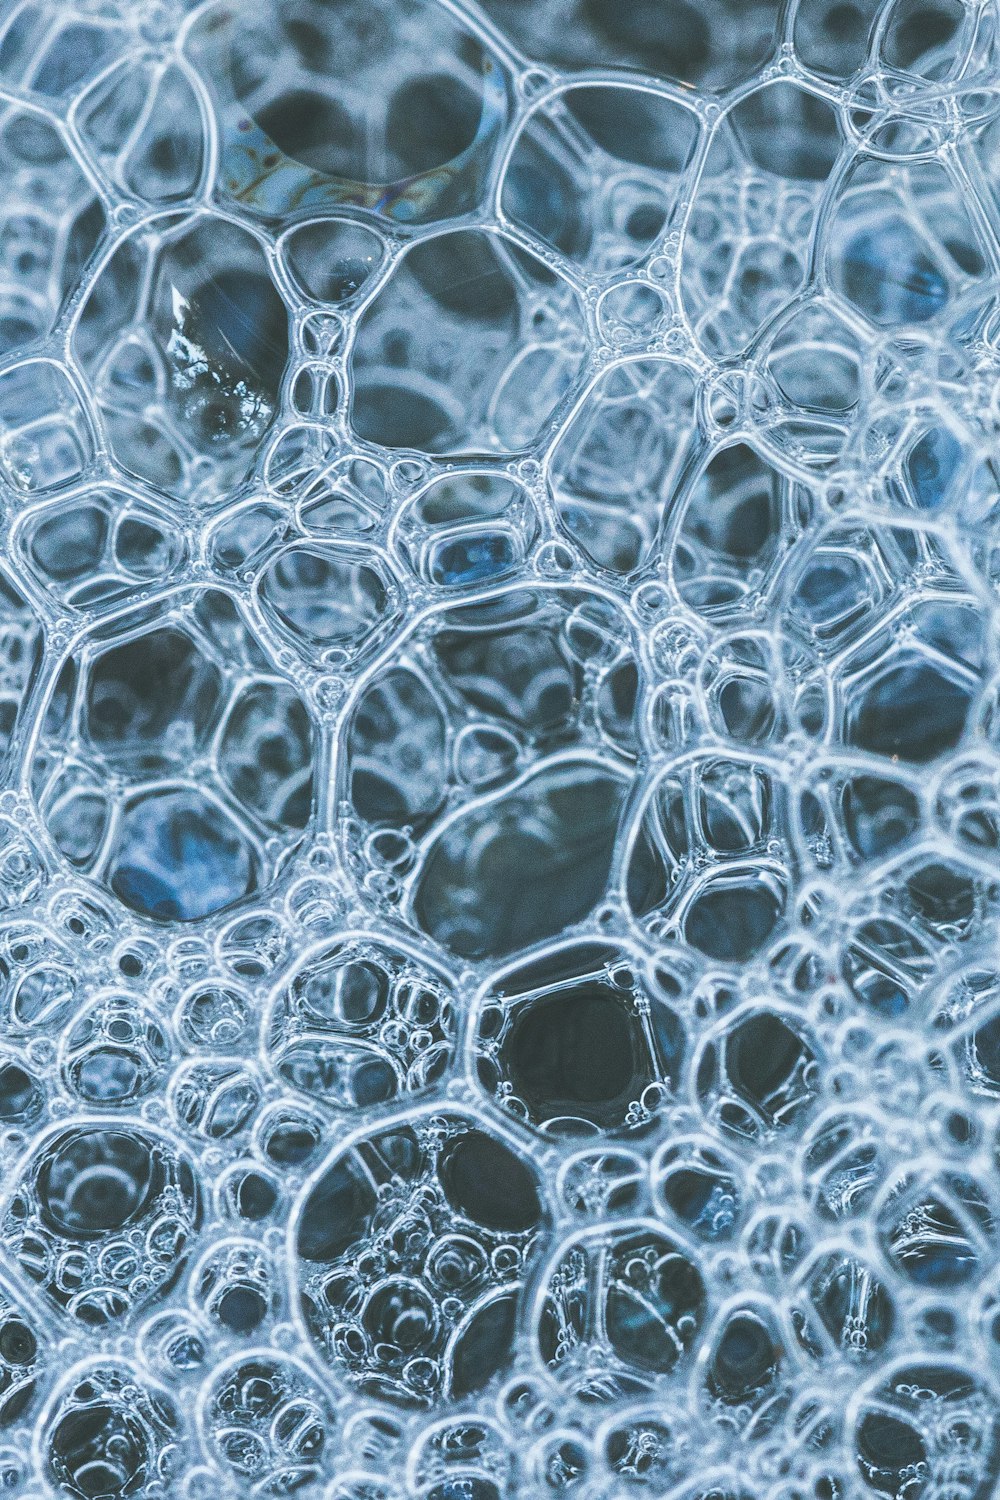 goccioline d'acqua su vetro trasparente